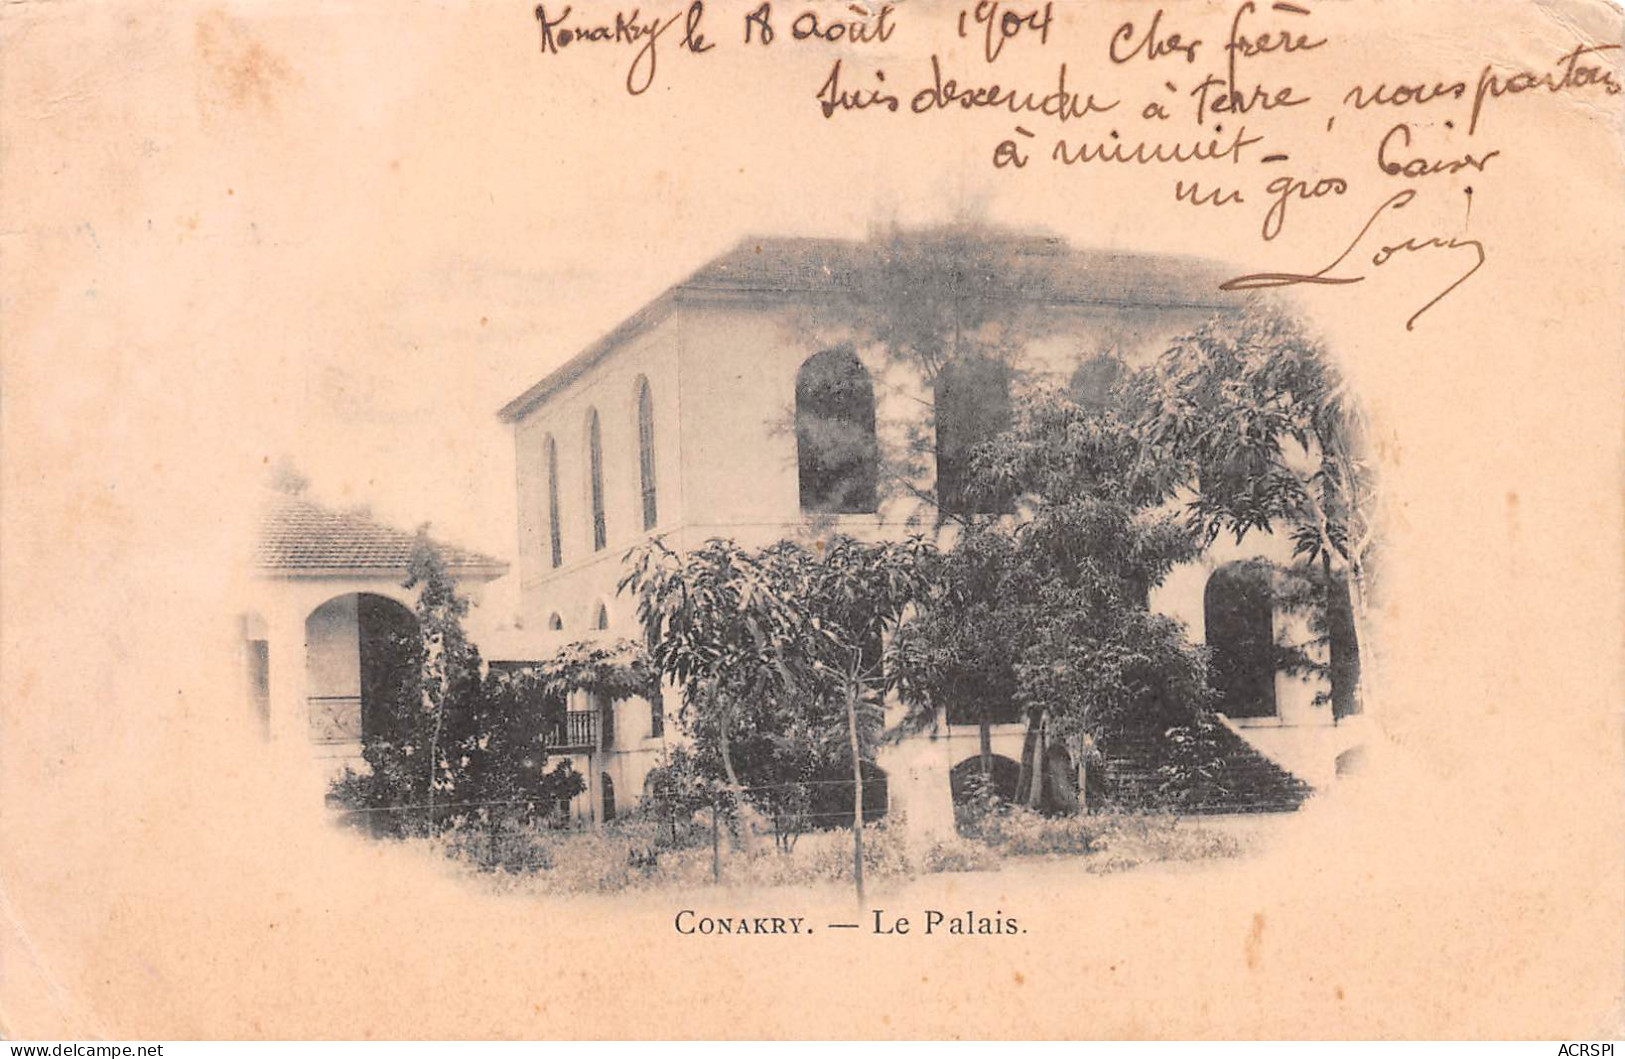 GUINEE CONAKRY Le Palais Du Gouverneur Carte Dos Simple    (Scan R/V) N° 32 \MP7168 - French Guinea